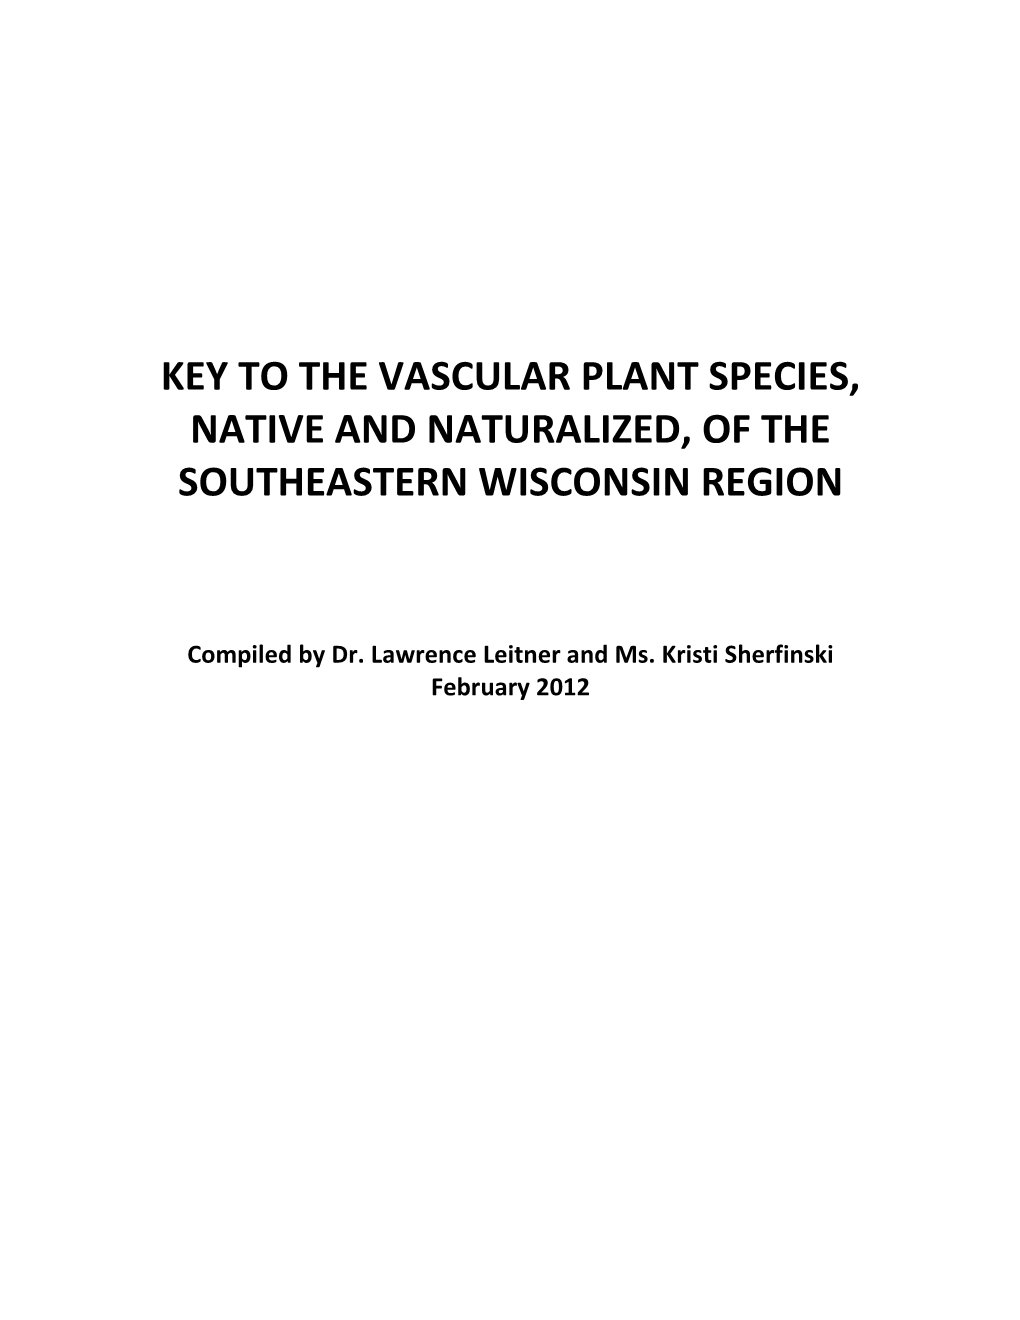 Southeastern Wisconsin Plant